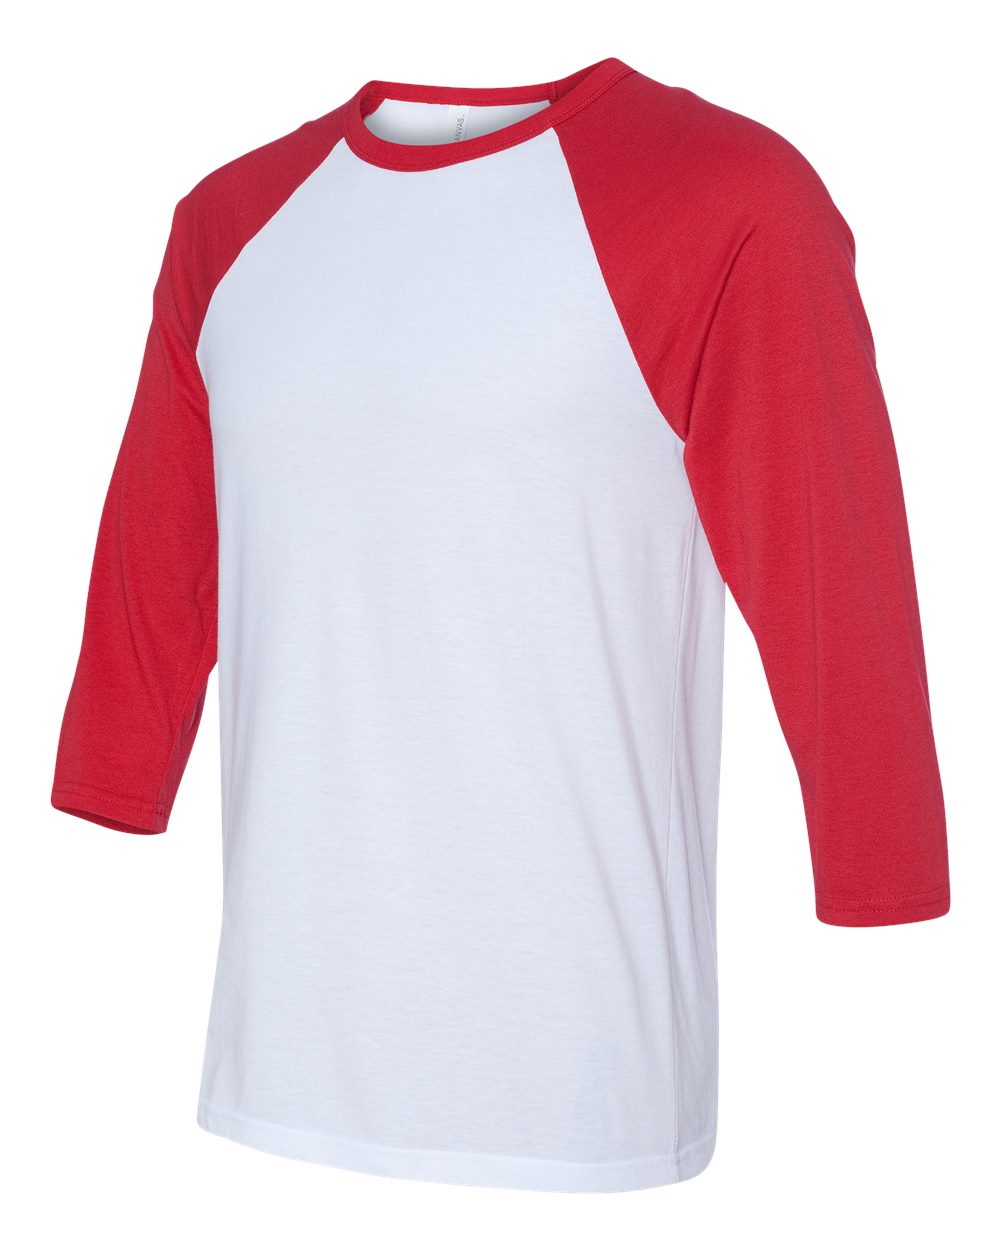 Bella + Canvas Unisex 3/4 Sleeve Baseball T-Shirt